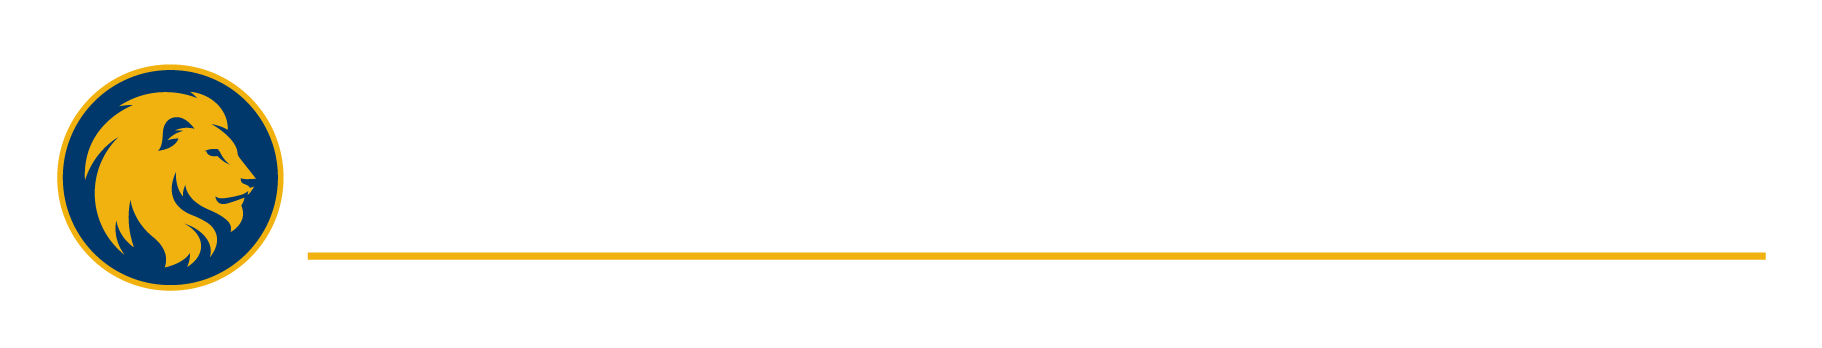 One line A&M-Commerce logo on dark background.